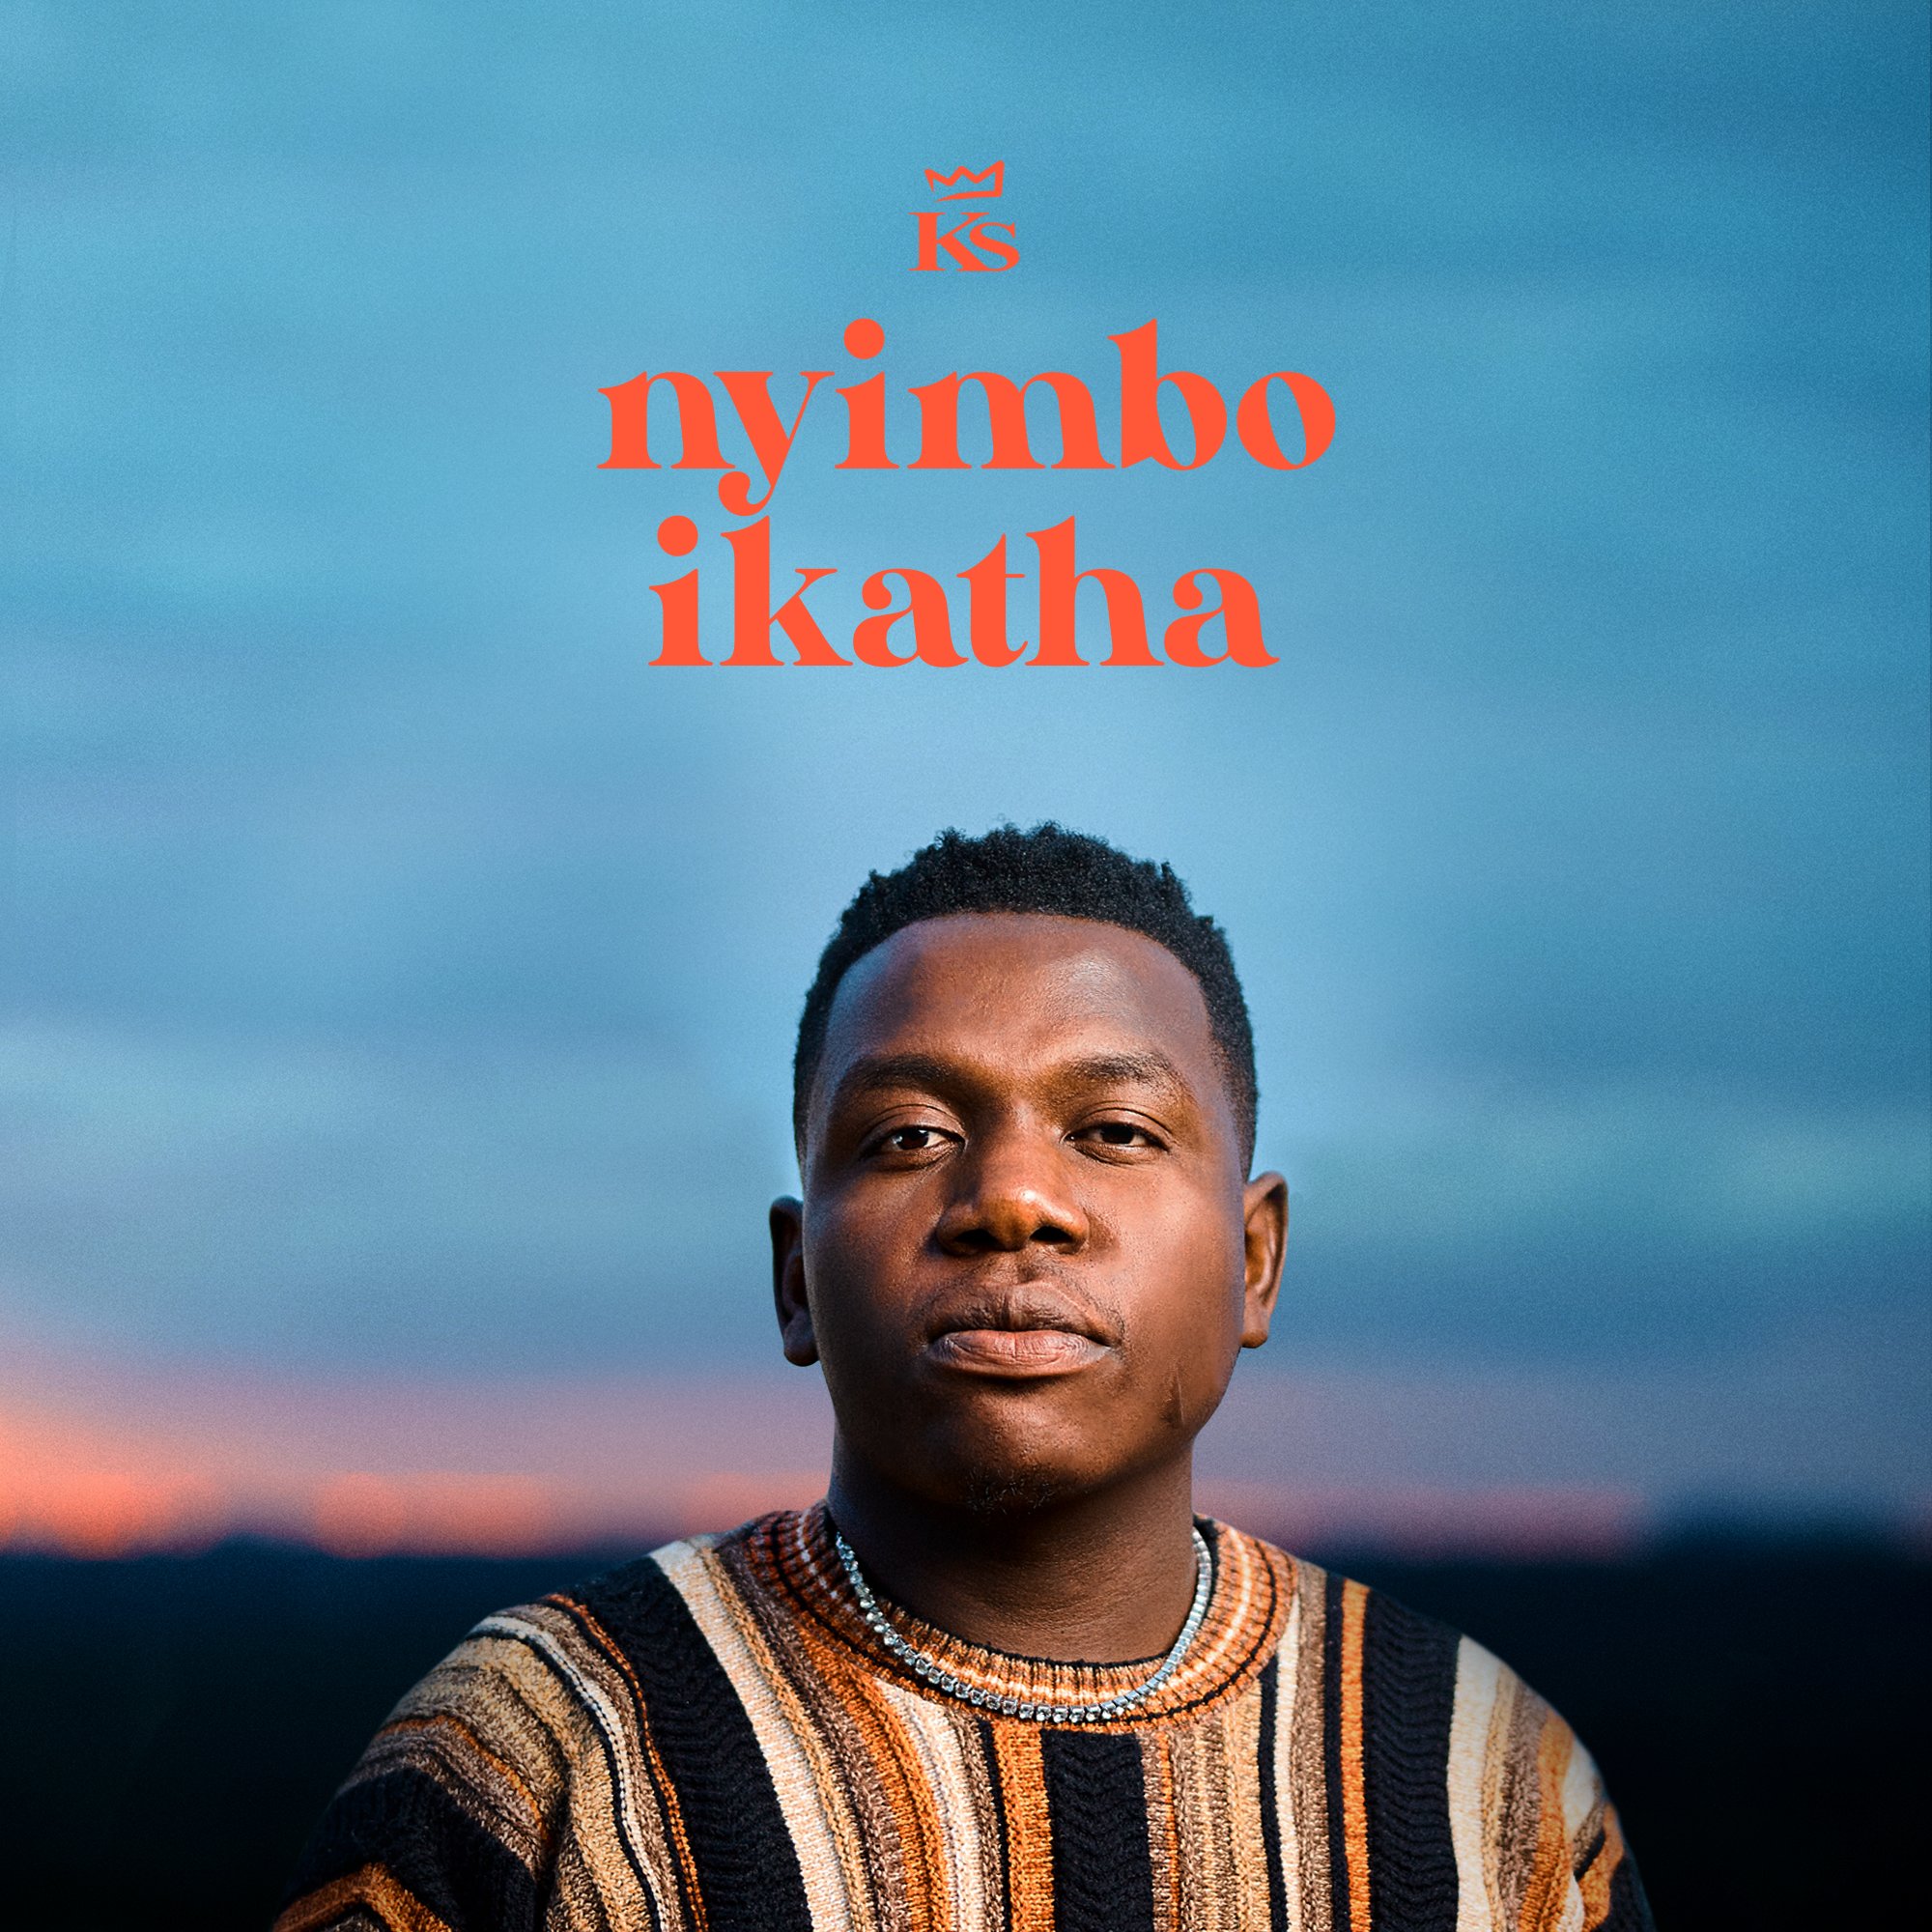 Nyimbo Ikatha